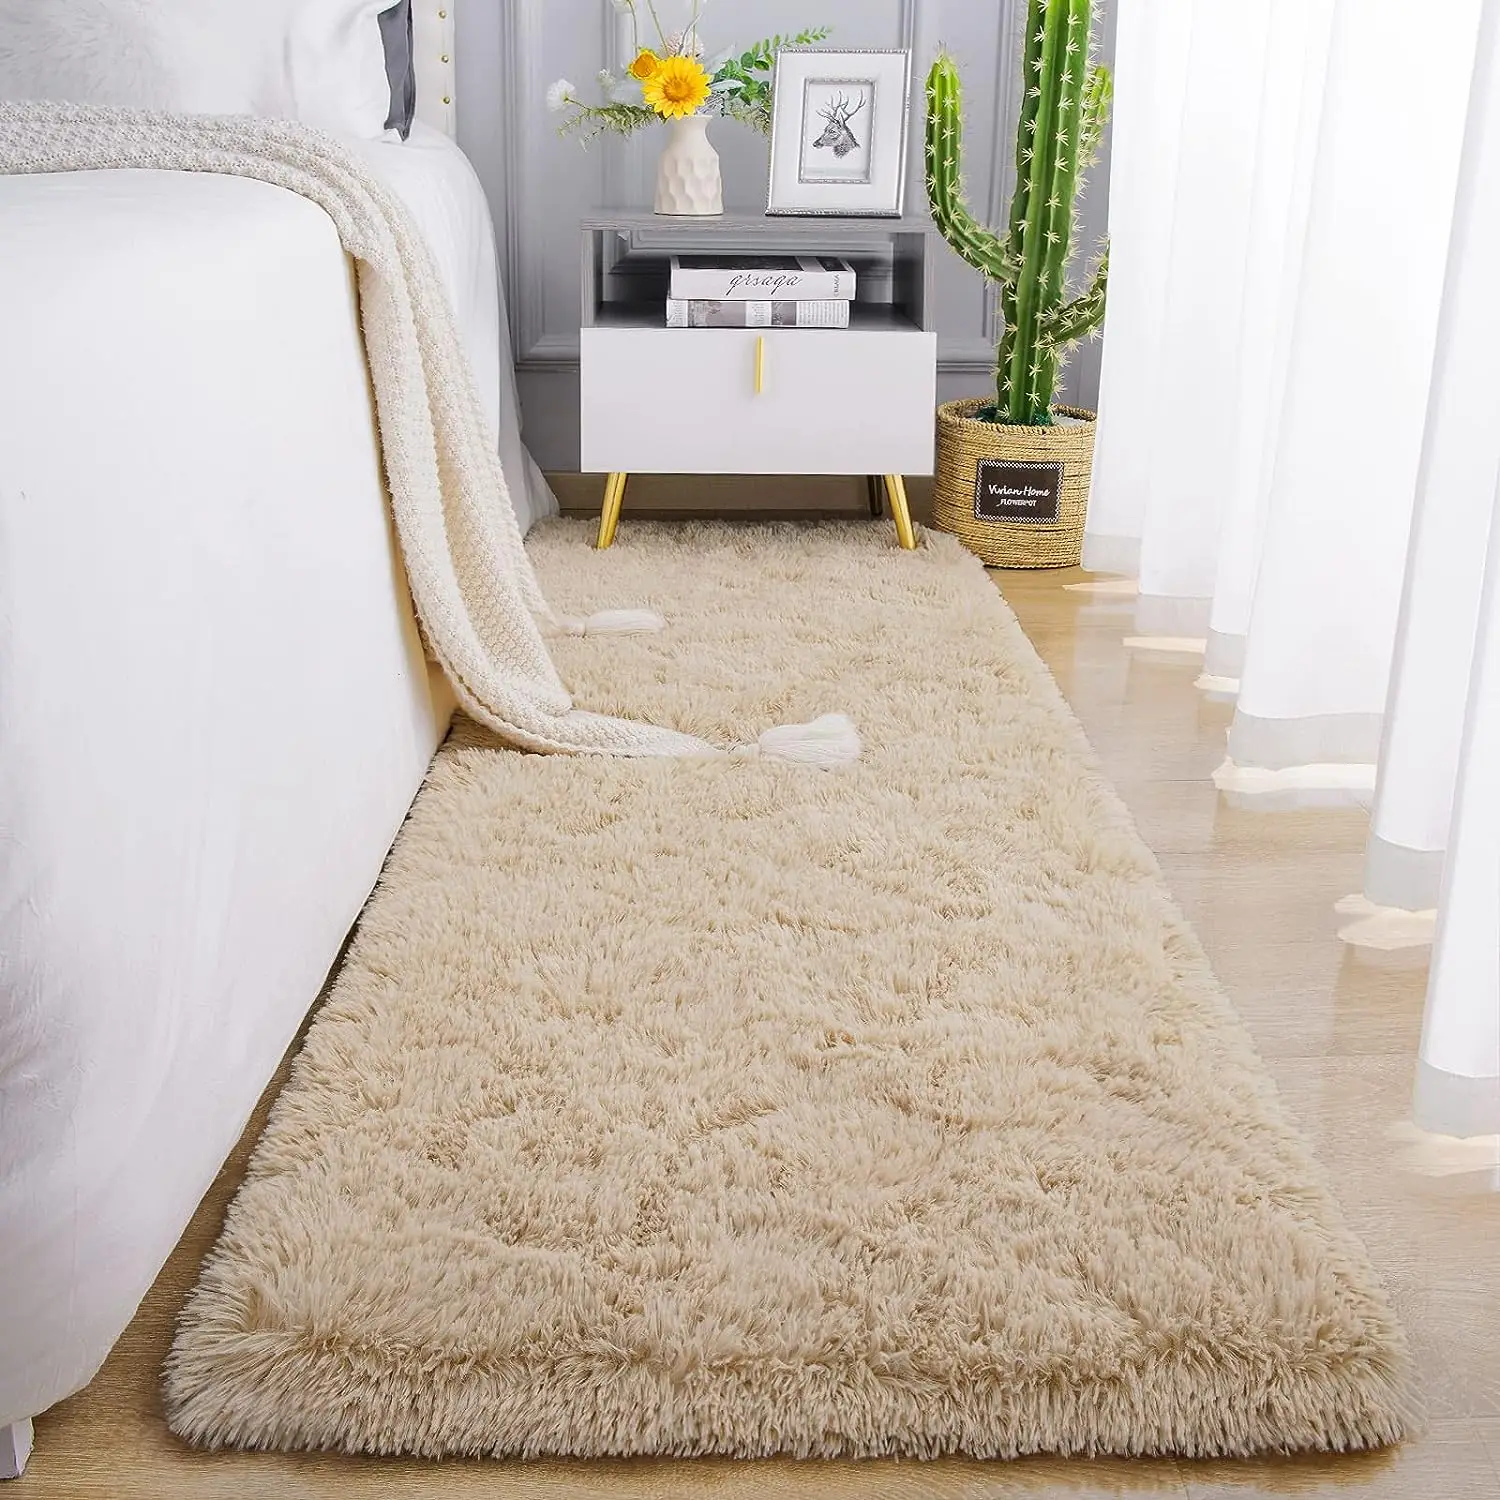 

Soft Modern Indoor Shaggy Area Rug for Bedroom Livingroom Dorm Kids Room Home Decorative Non-Slip Plush Fluffy Furry Fur Rugs